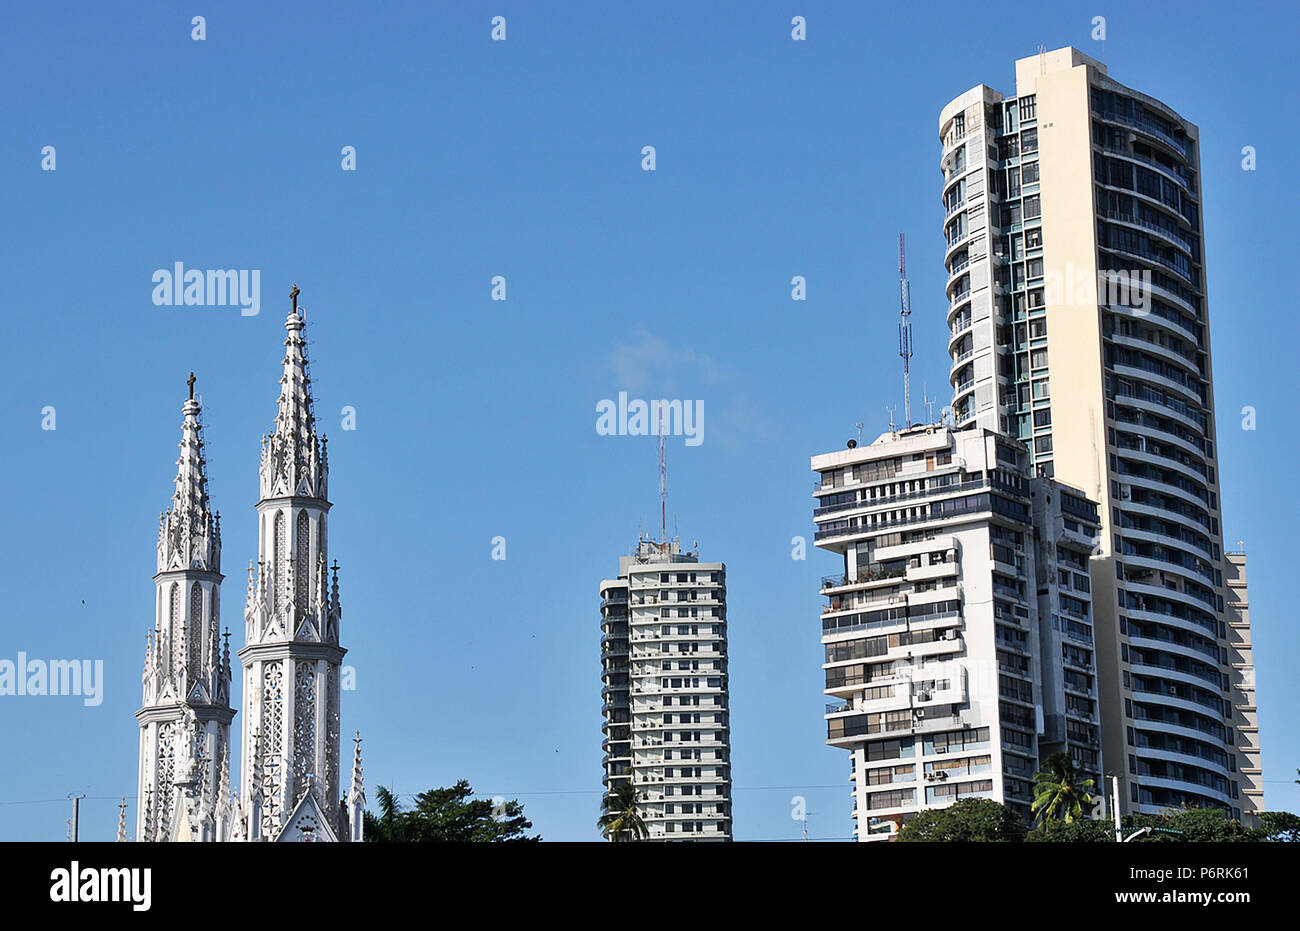 El Carmen church and residential towers, Panama city, Republic of Panama Stock Photo